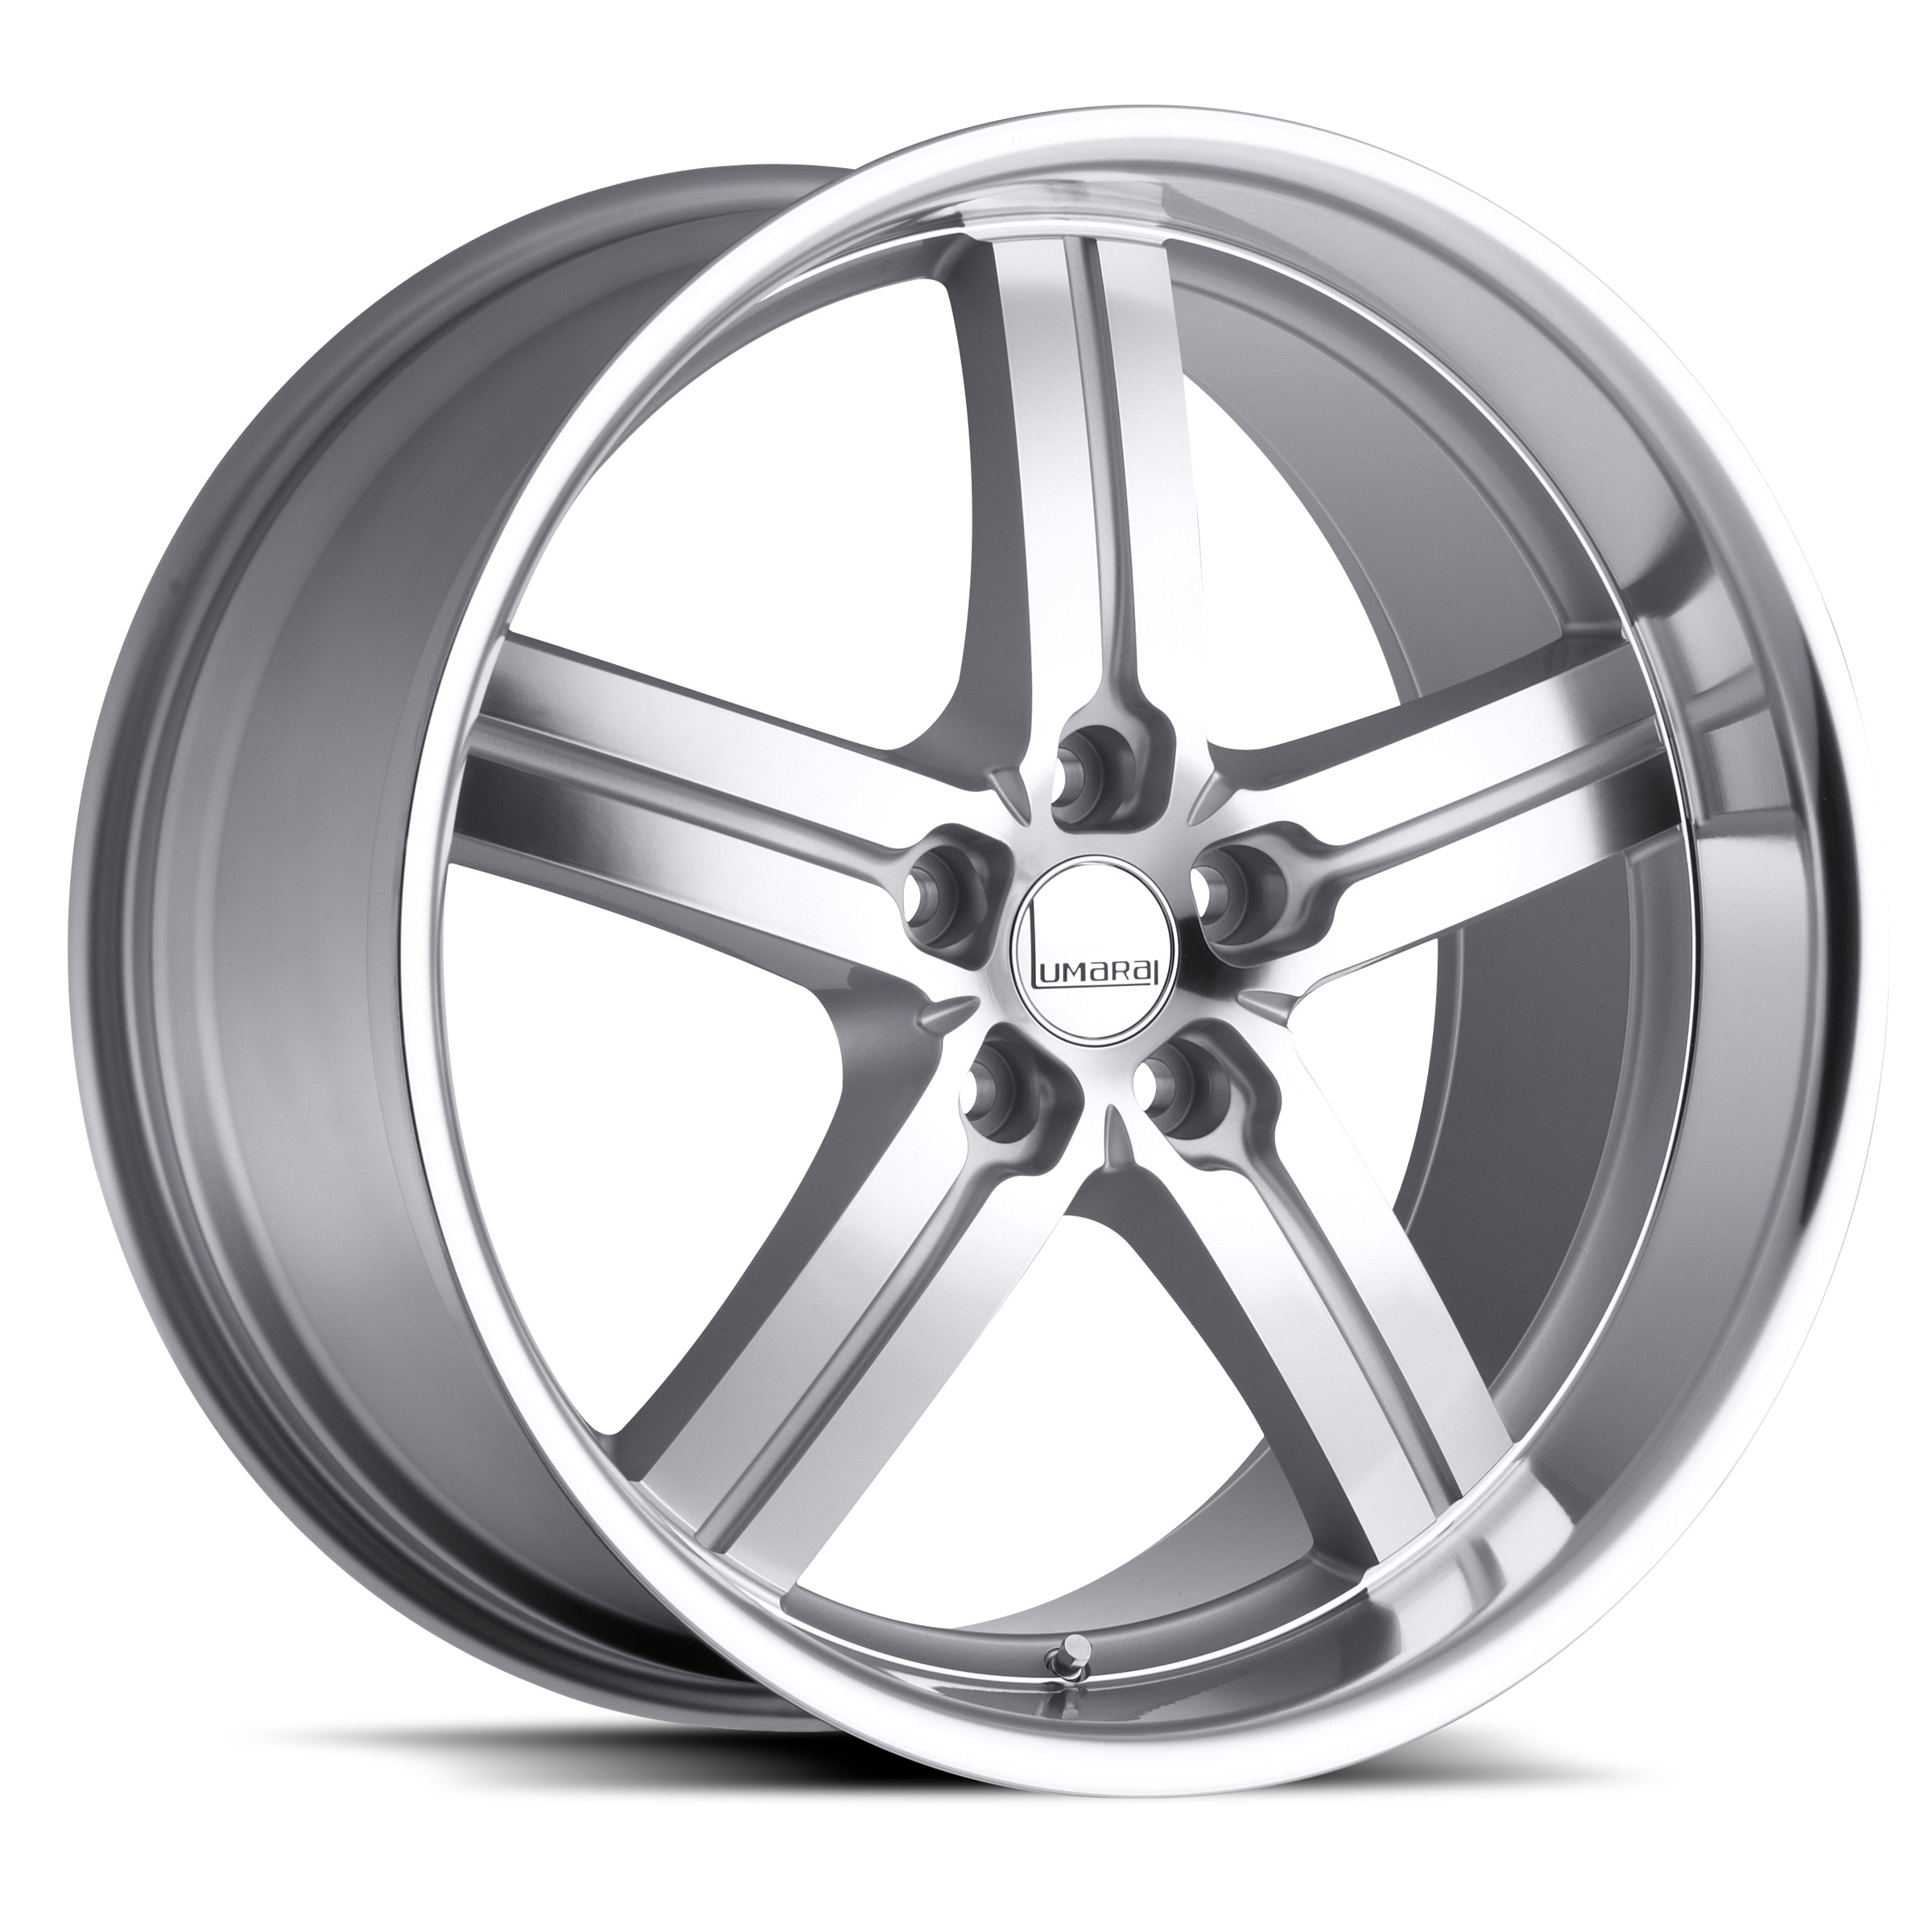 Lumarai Wheels Introduces Luxury Wheels Exclusively for Lexus Vehicles